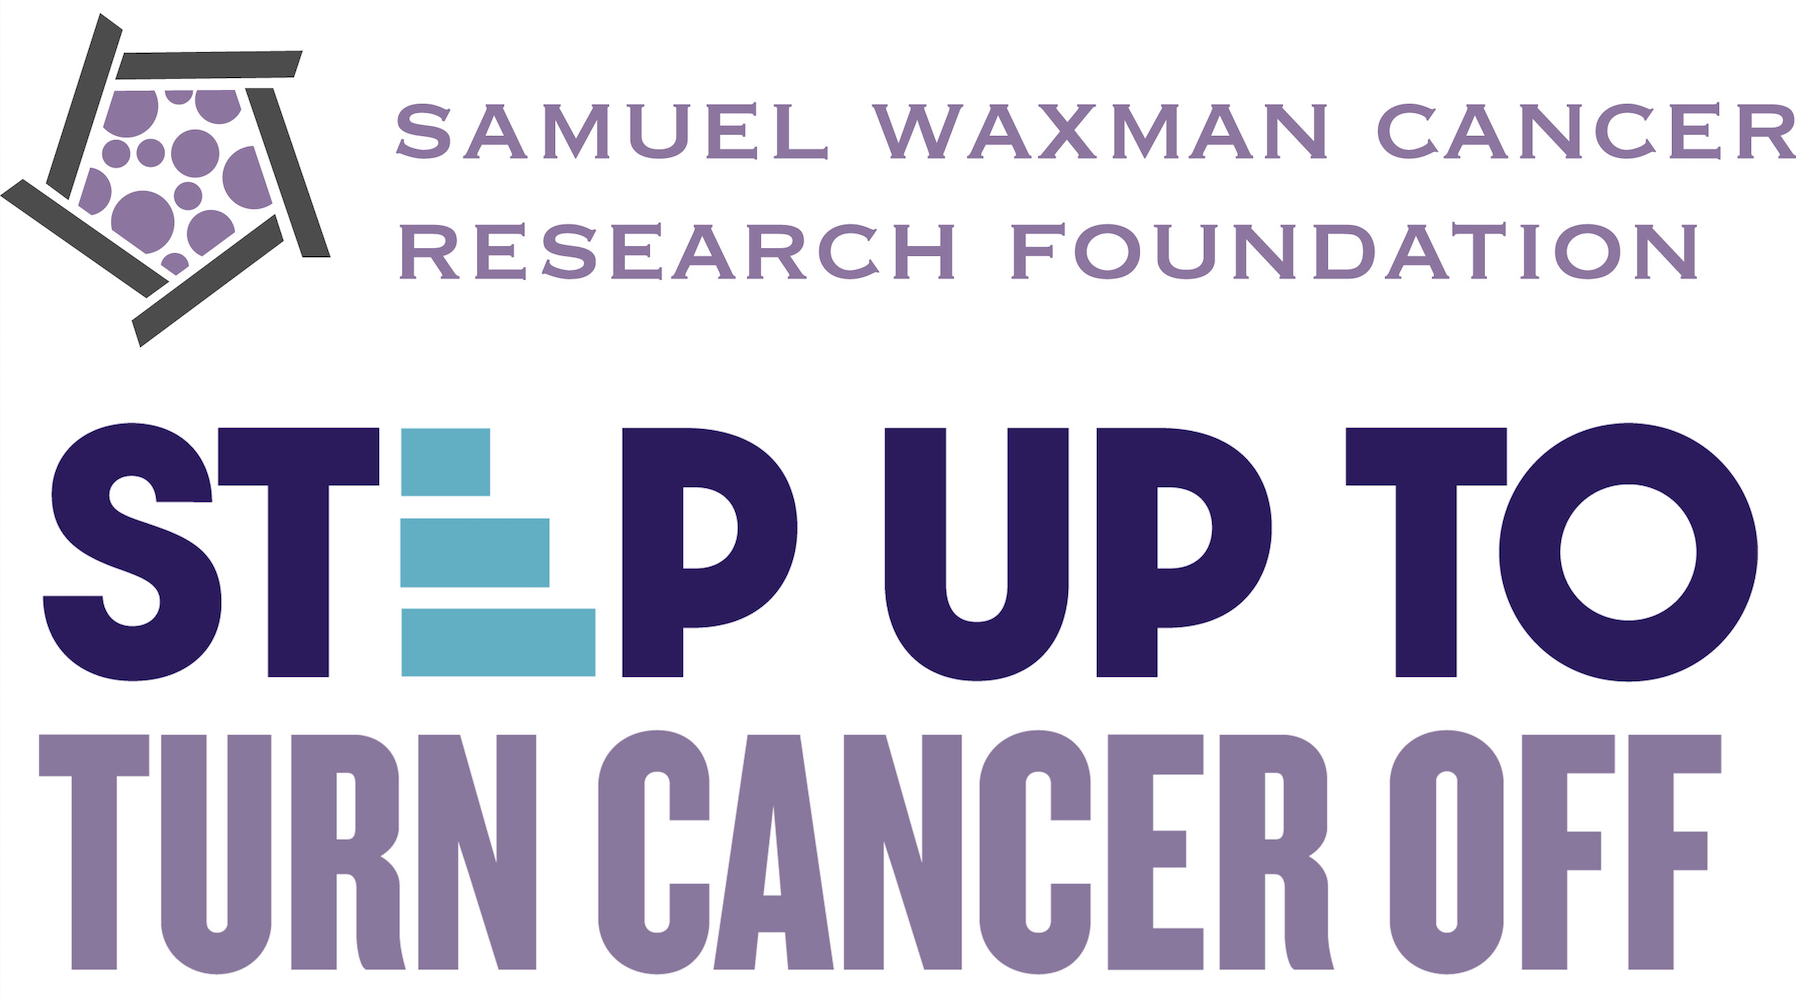 Samuel Waxman Cancer Research Foundation